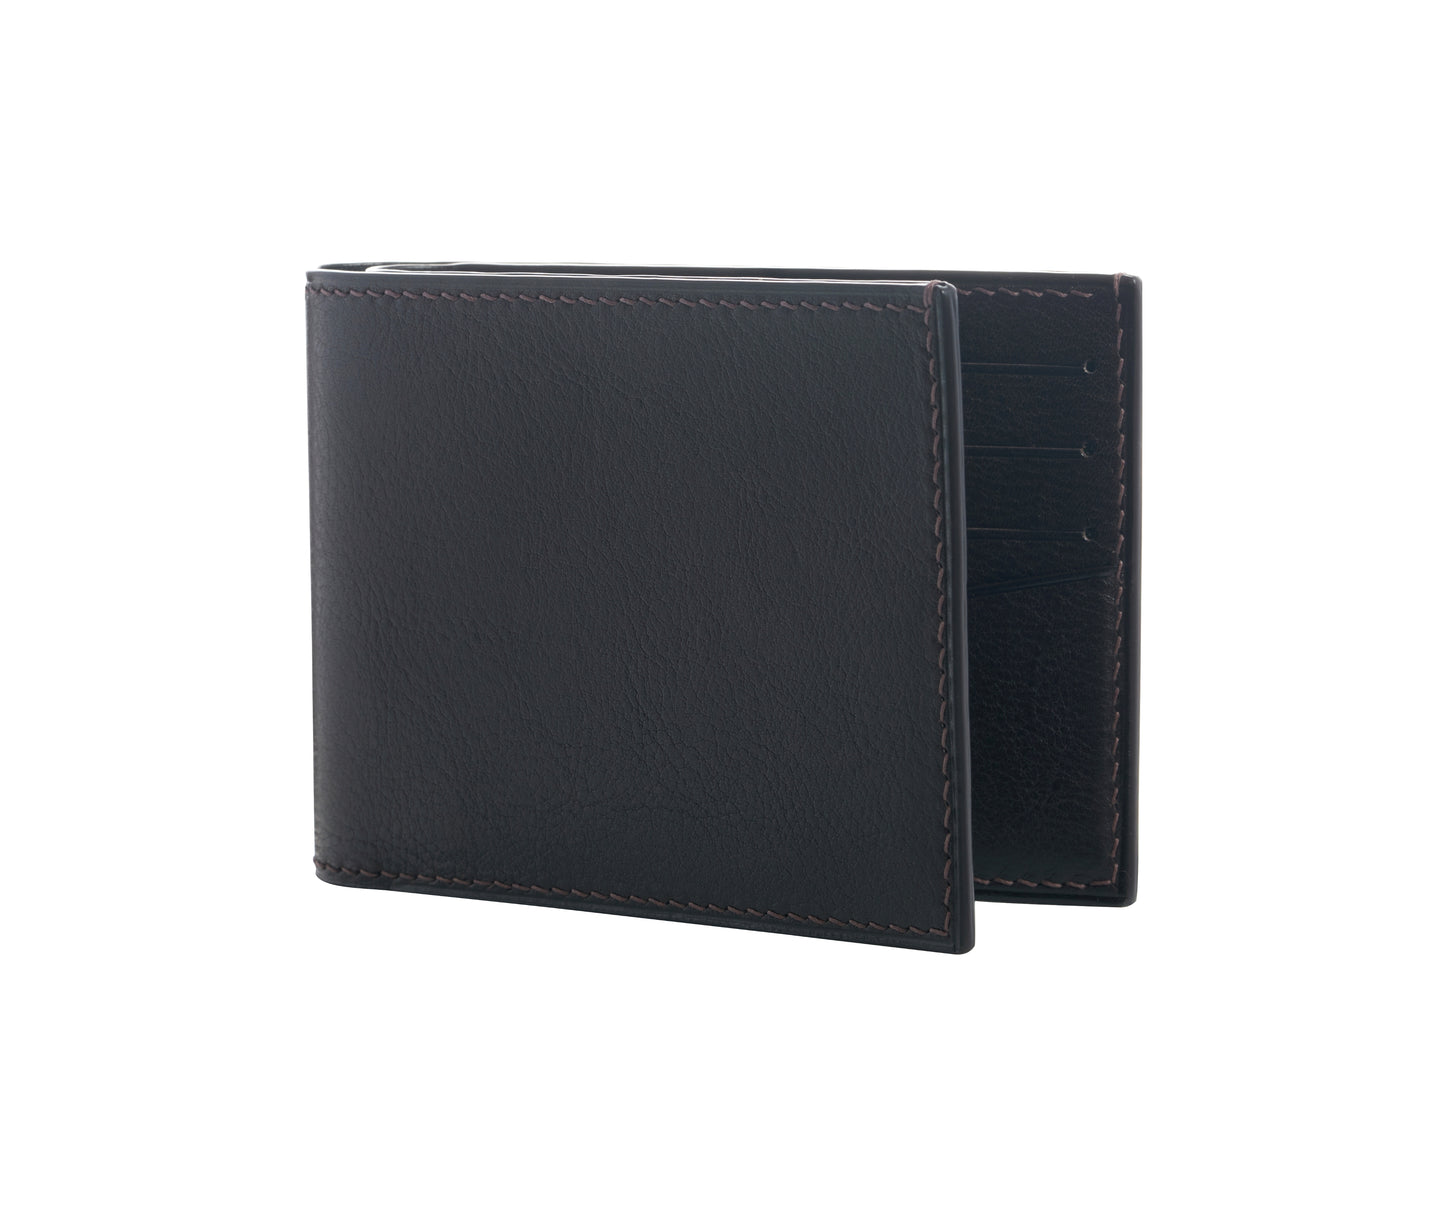 Vegetable Tanned Leather Wallet - Dark Brown - 8-Pocket Slim